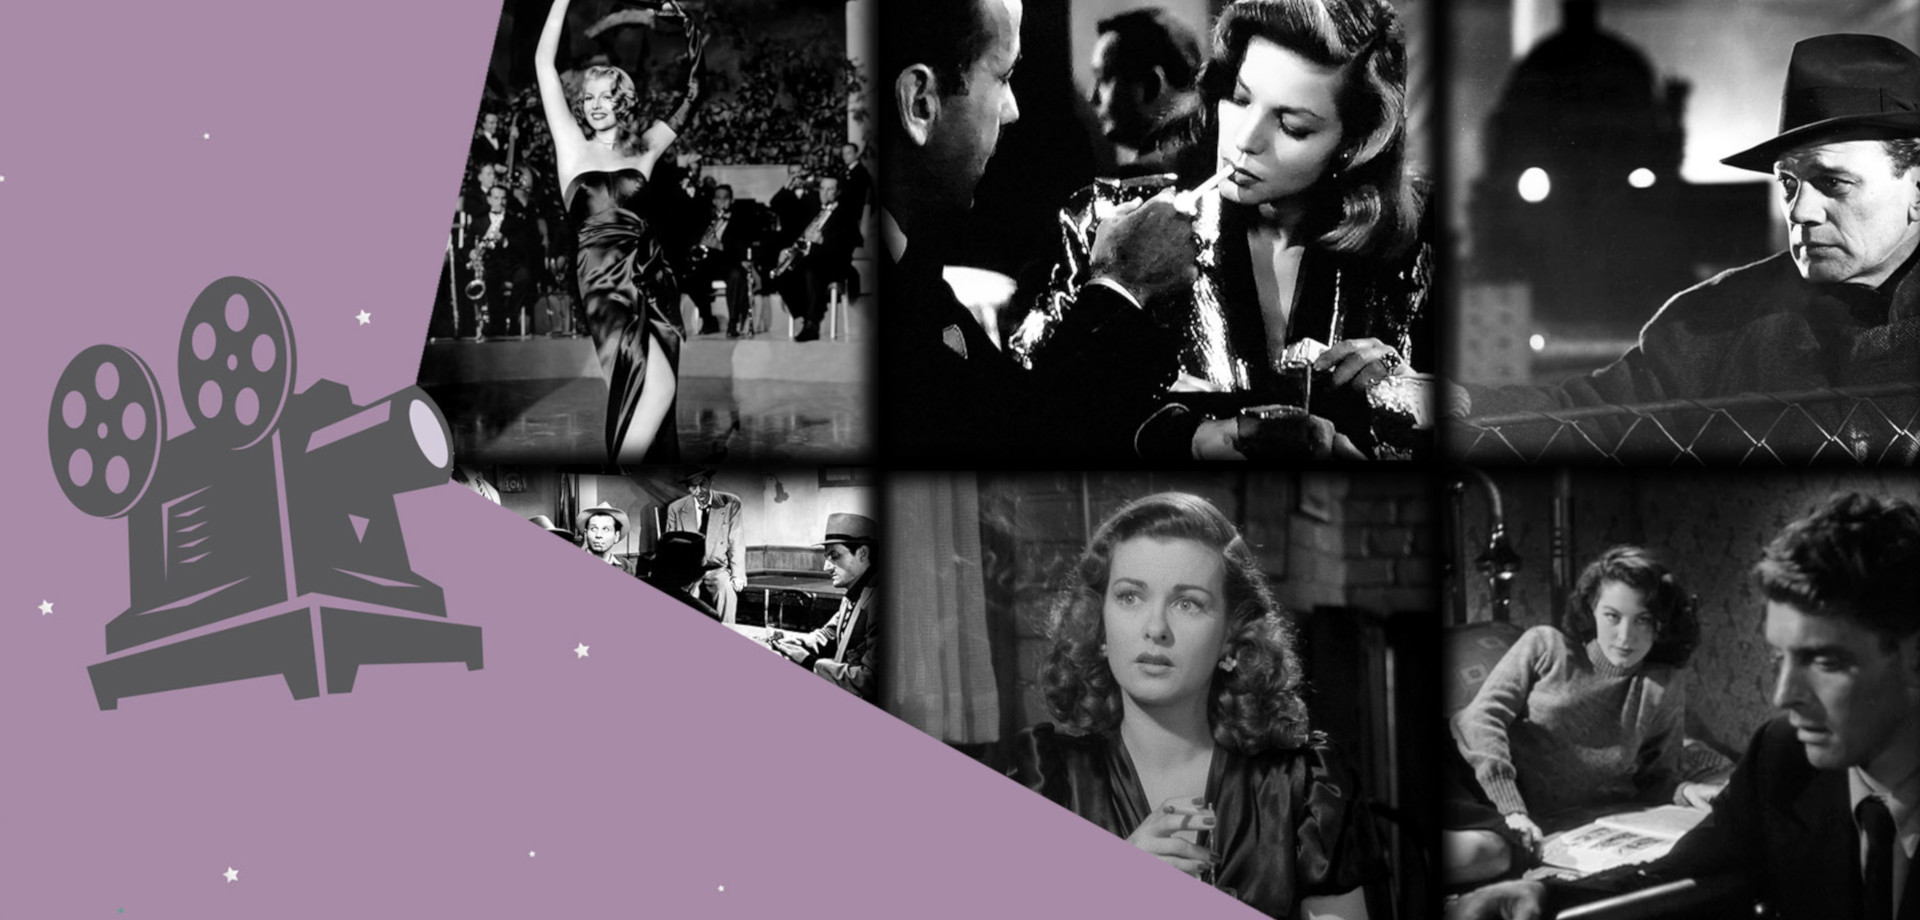 “Noir Classics”: Κλασικές ταινίες νουάρ από τις δεκαετίες του ‘40 και του ’50, στον εξώστη του Ιστορικού Αρχείου ΠΙΟΠ

